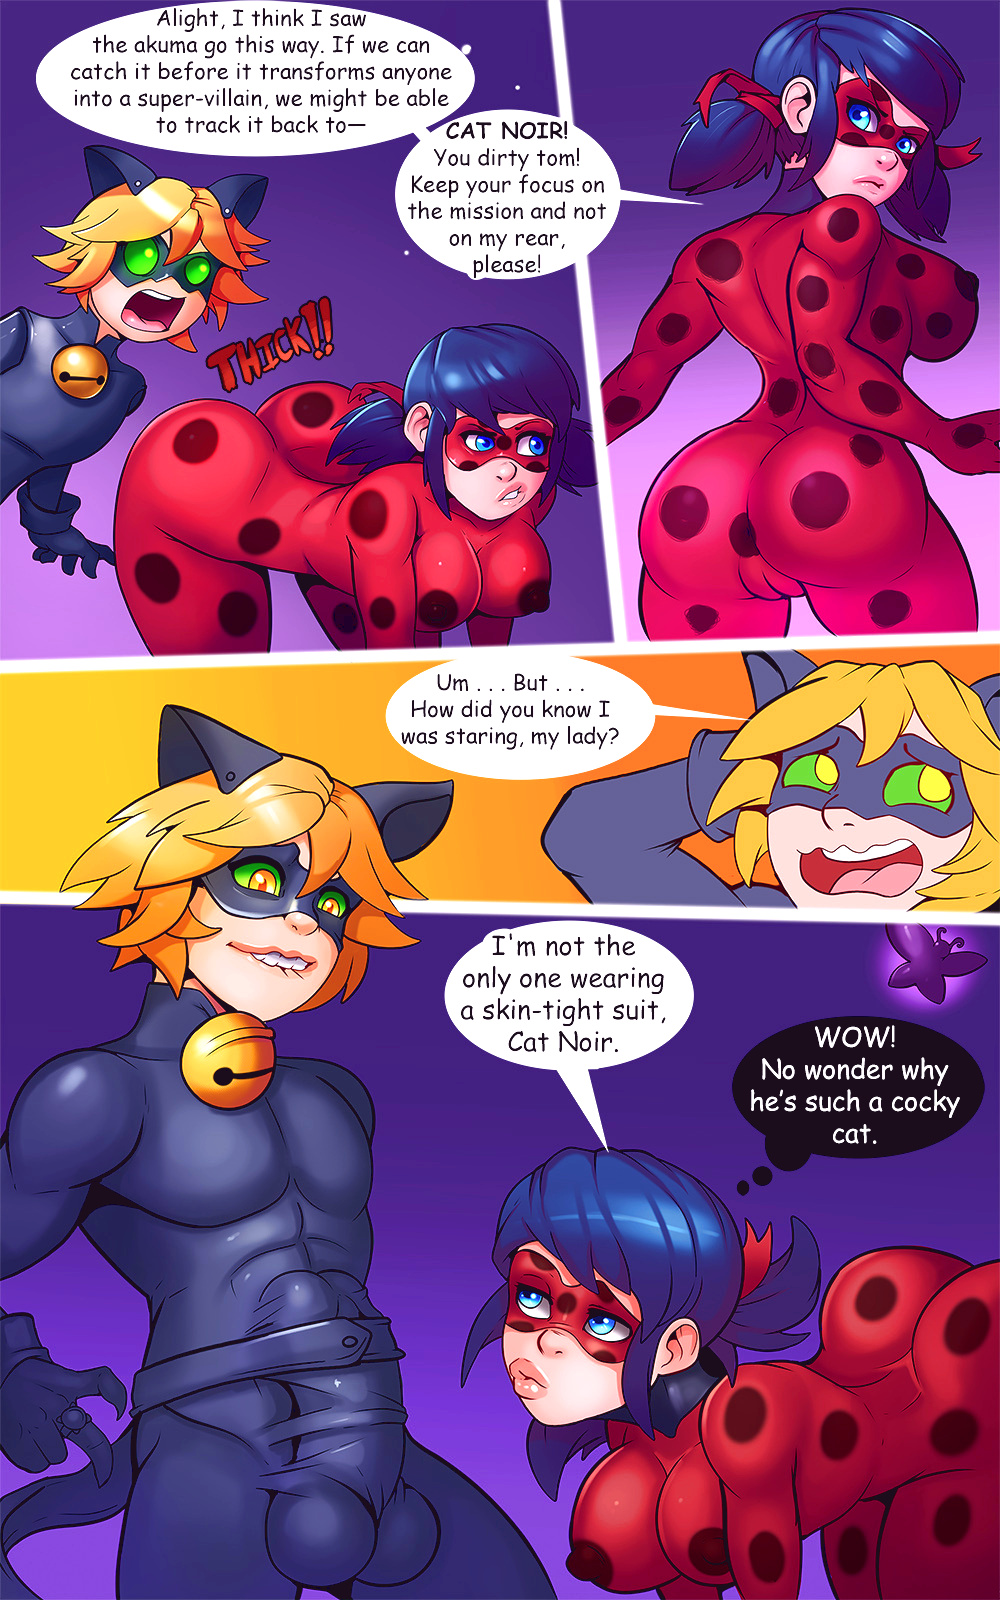 Ladybug versus The Cougar